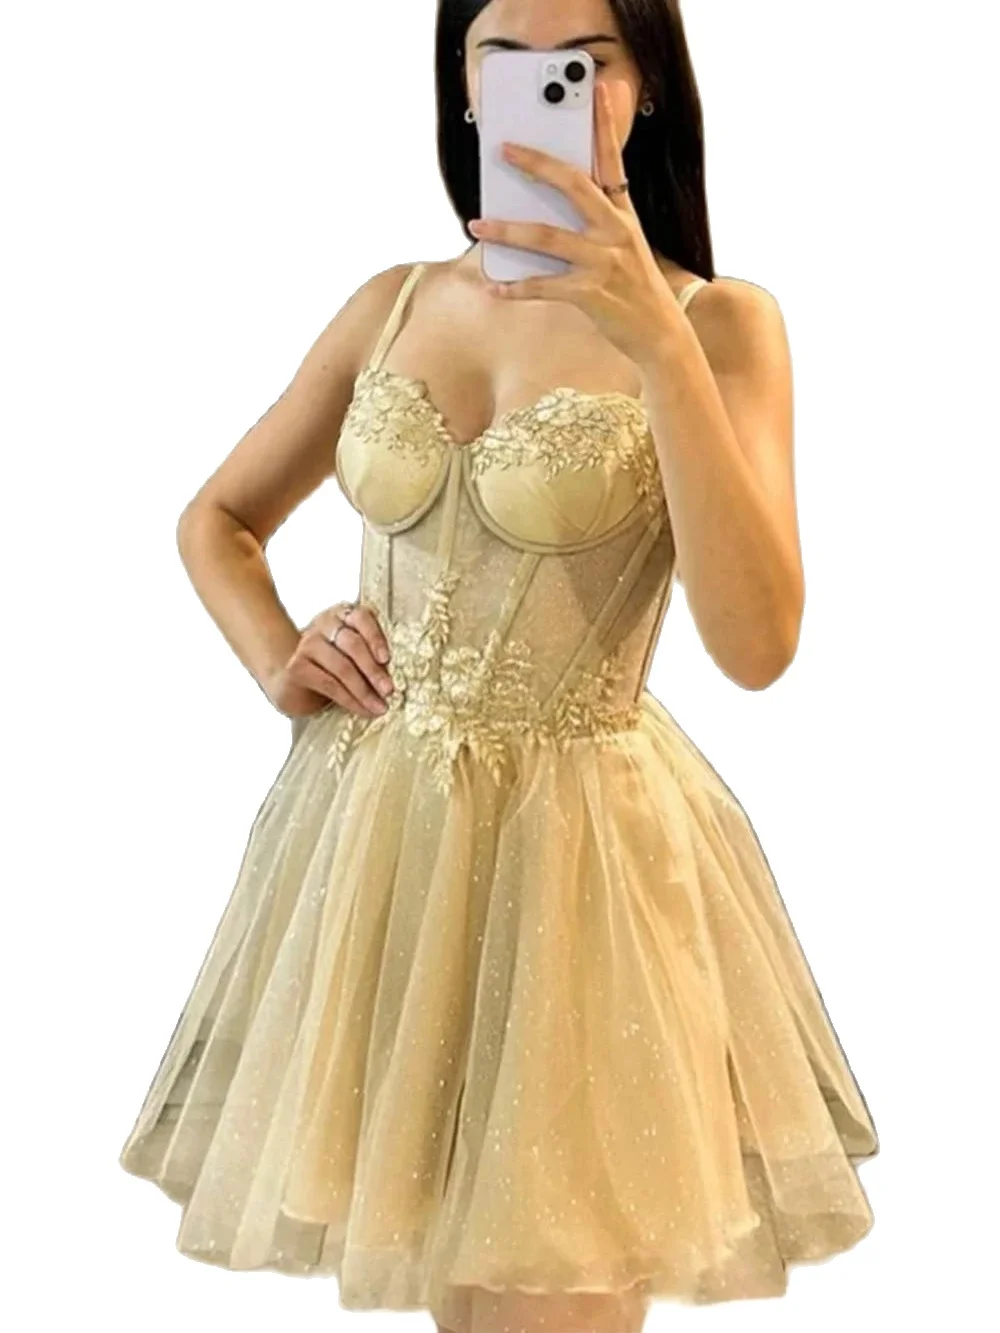 

Bealegantom Spaghetti Straps Short Homecoming Dresses 3D Flower Lace Applique Mini Graudation Cocktail Prom Party Gown QA224